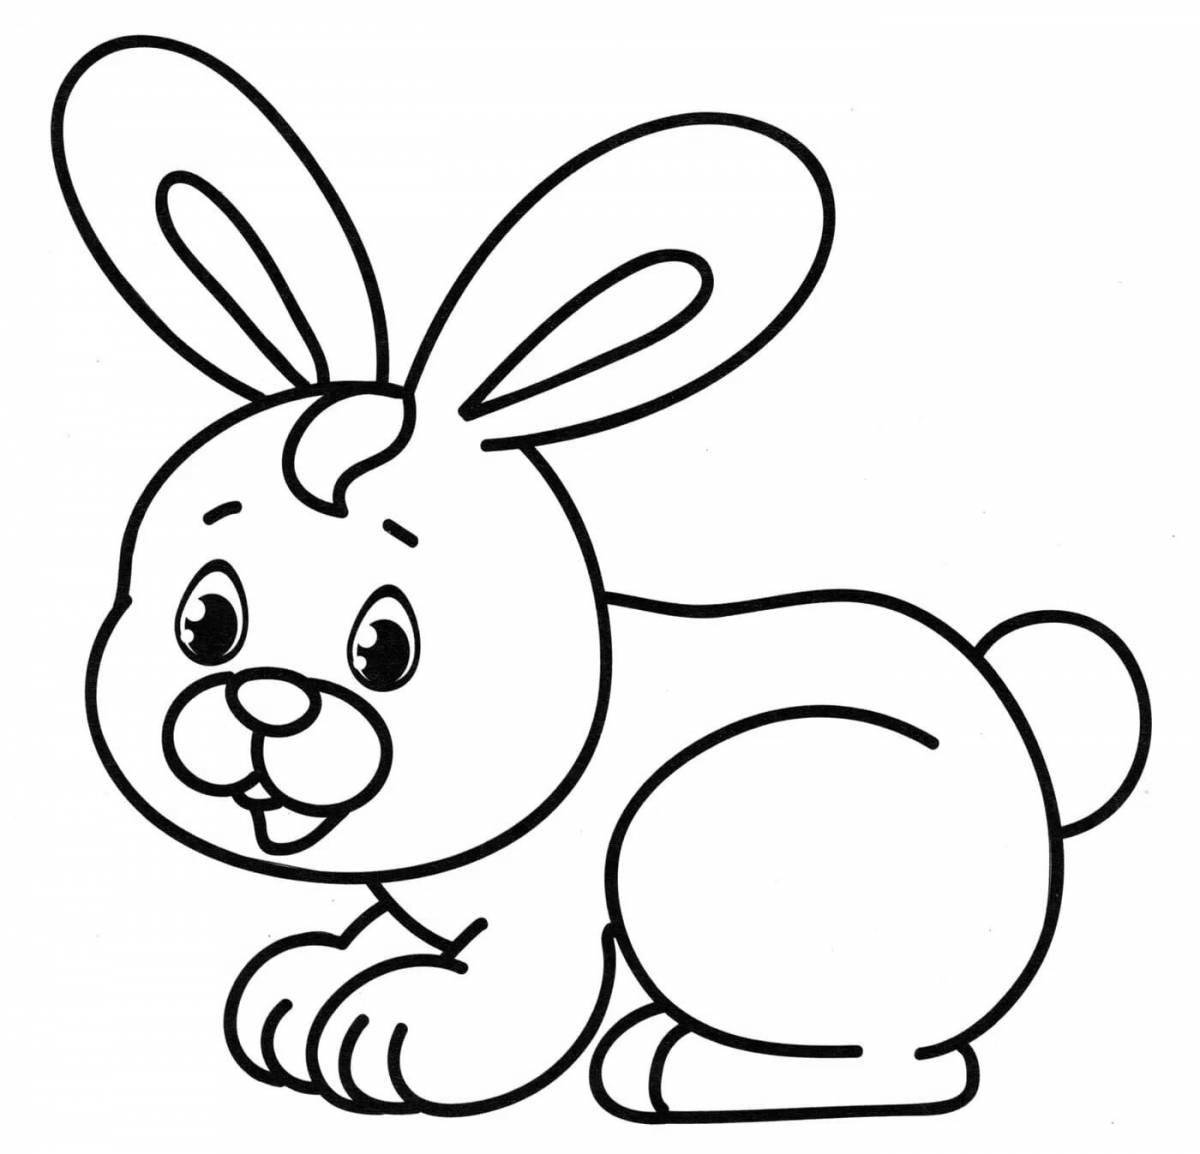 Humorous rabbit coloring book for children 3 4